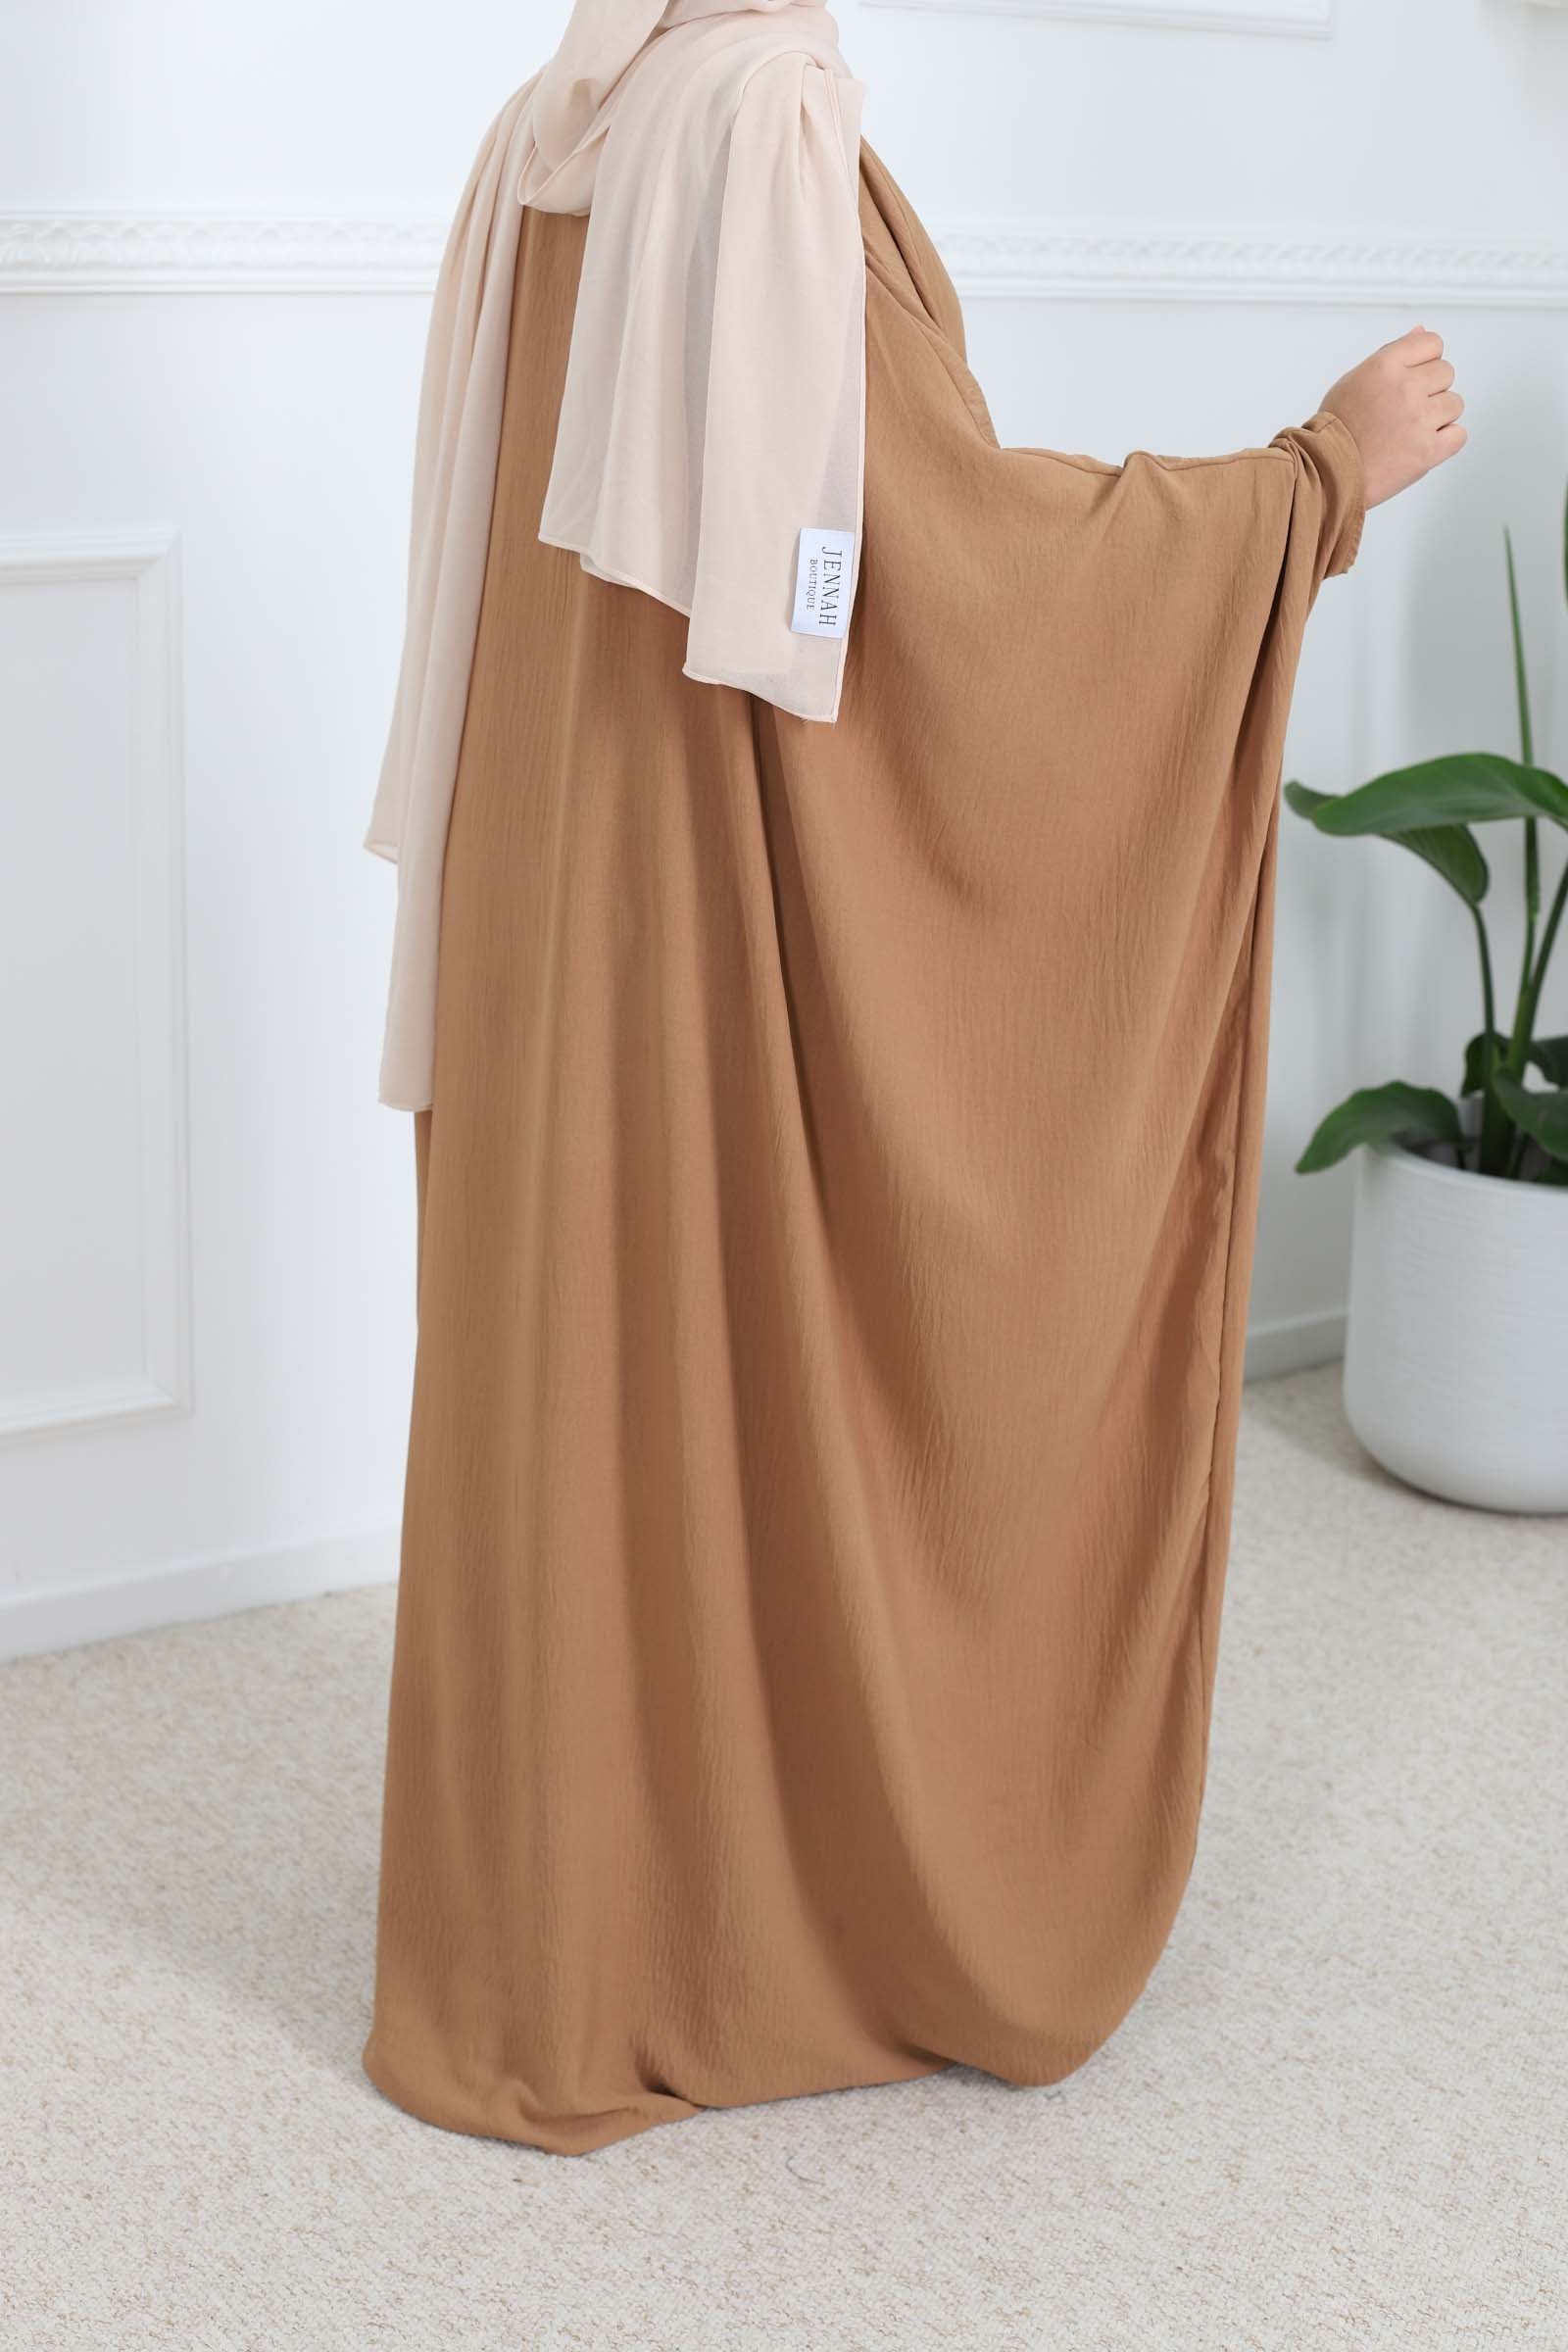 Abaya saoudienne femme petit ptix , abaya farasha pas chère , abaya